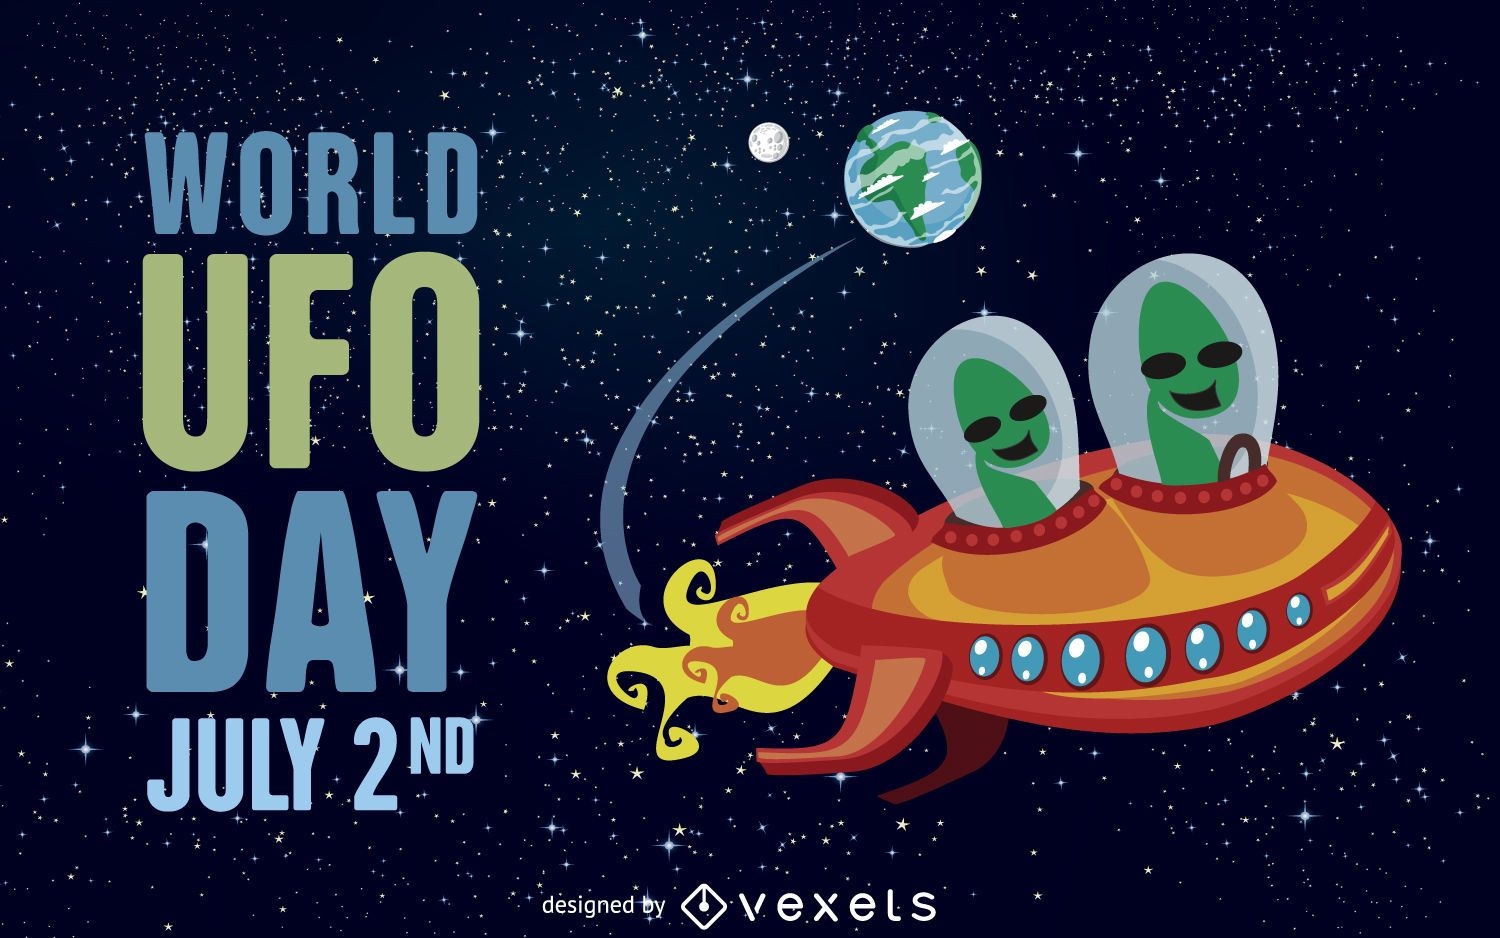 World UFO Day illustration